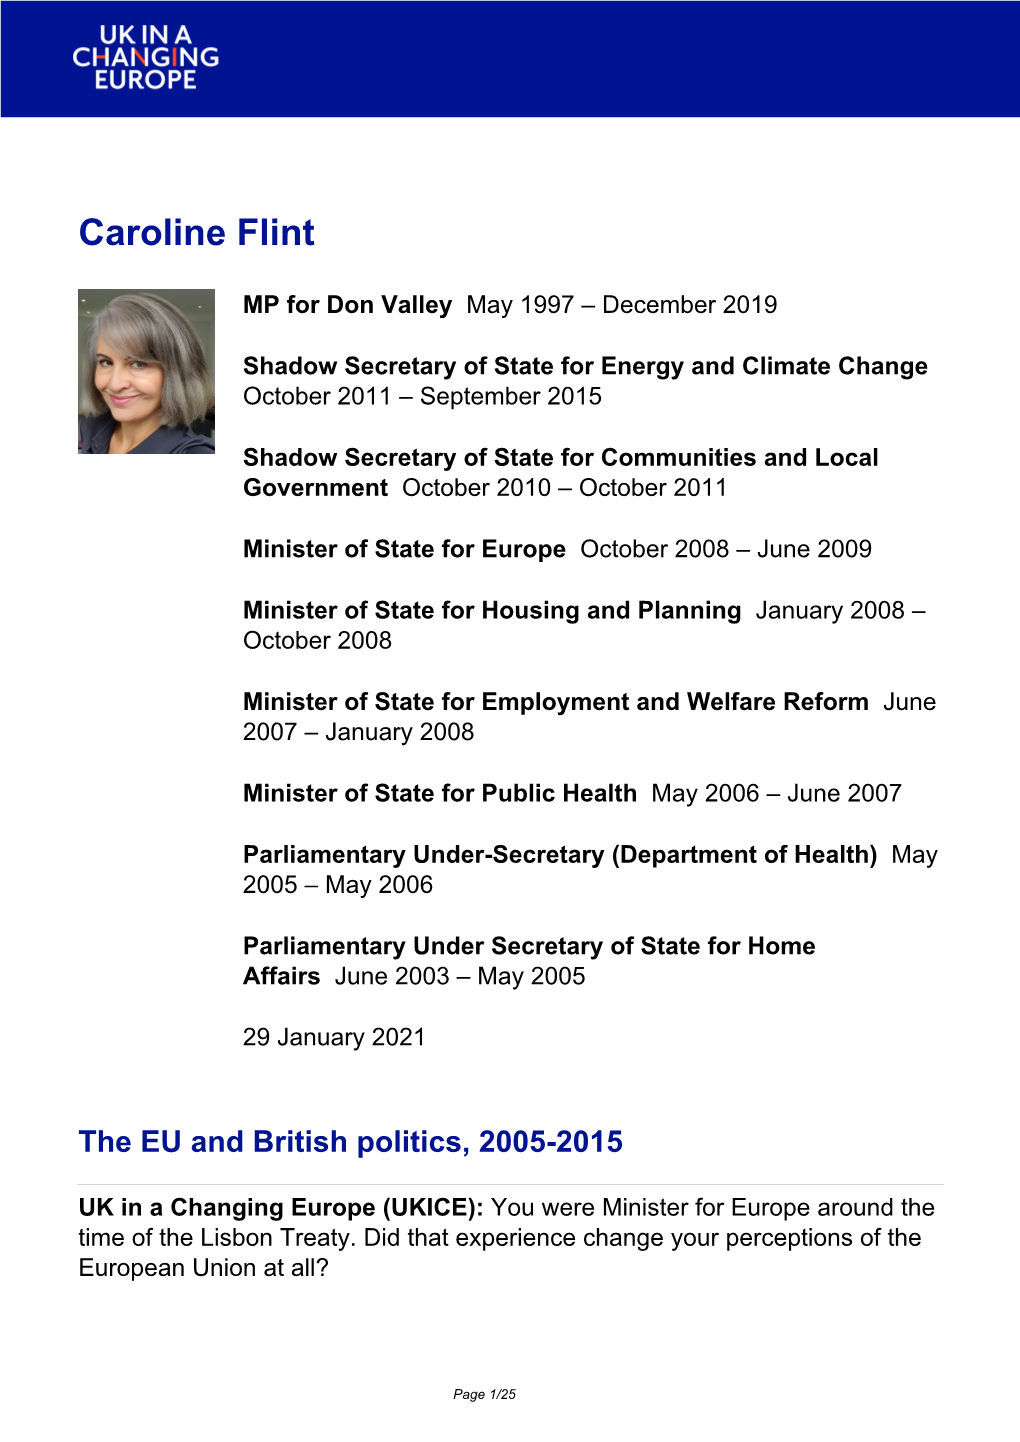 Caroline Flint